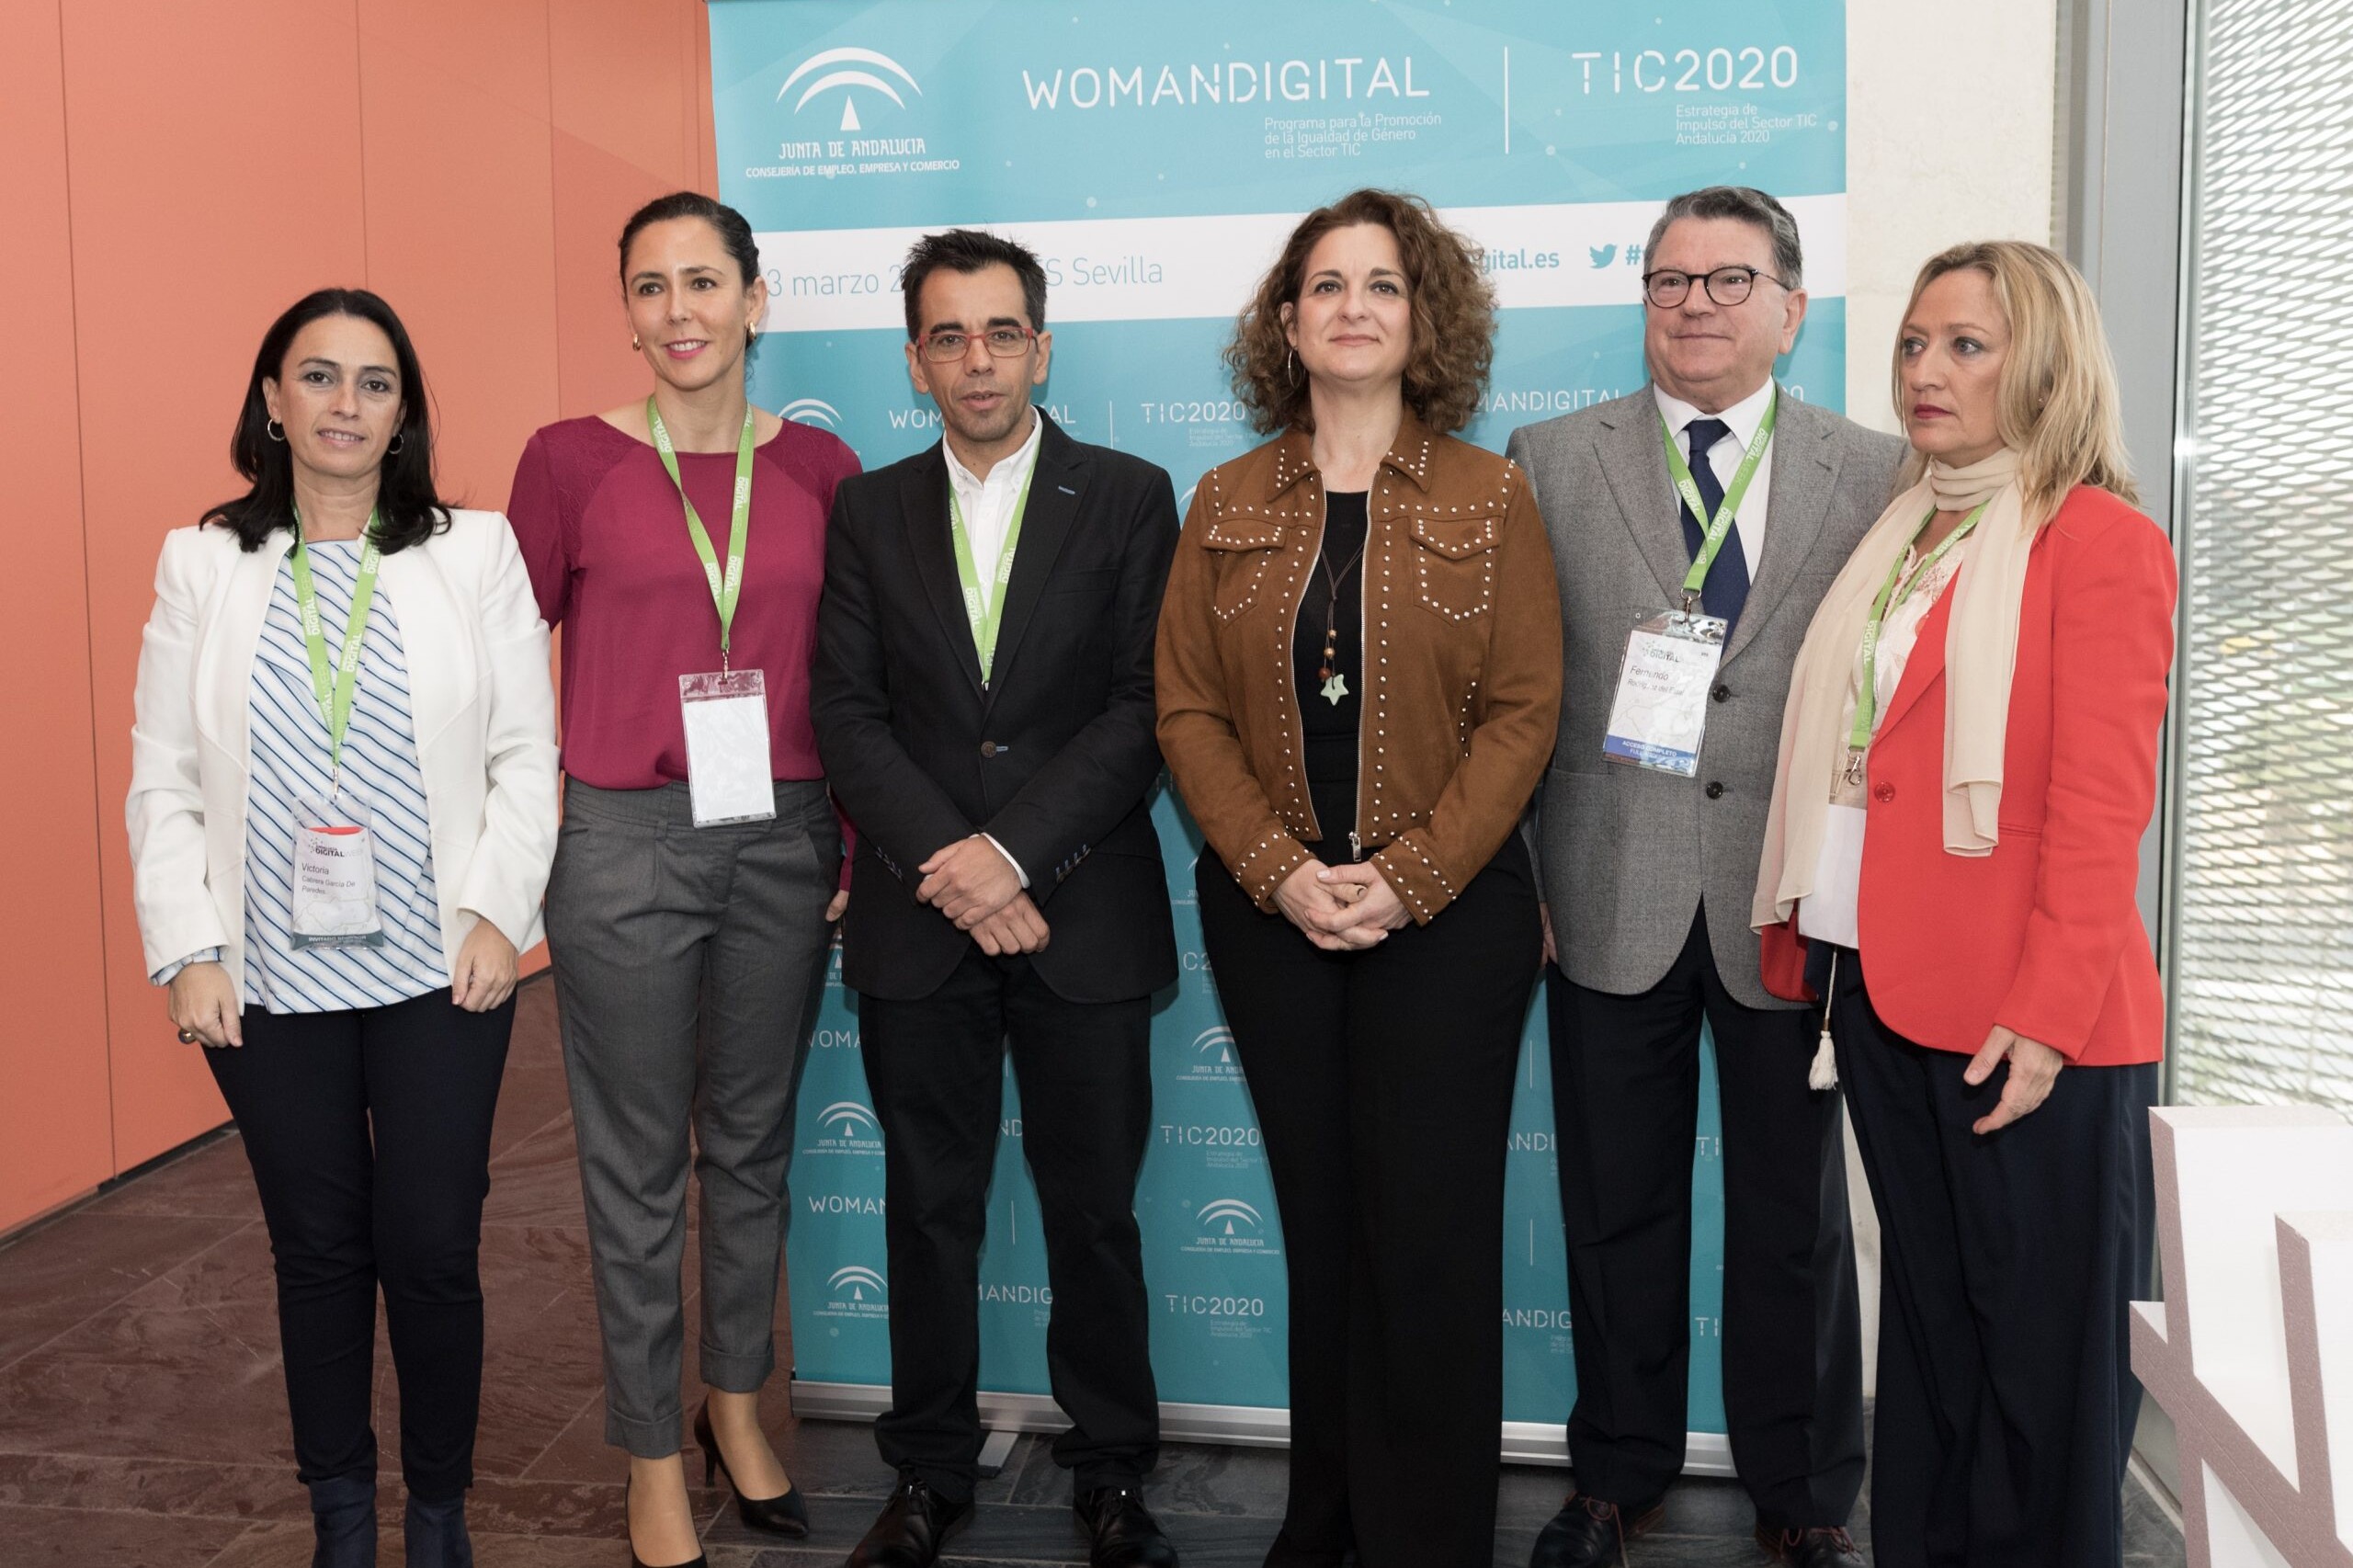 Grupo posando en el photocall de la Jornada Womandigital Sevilla 2018